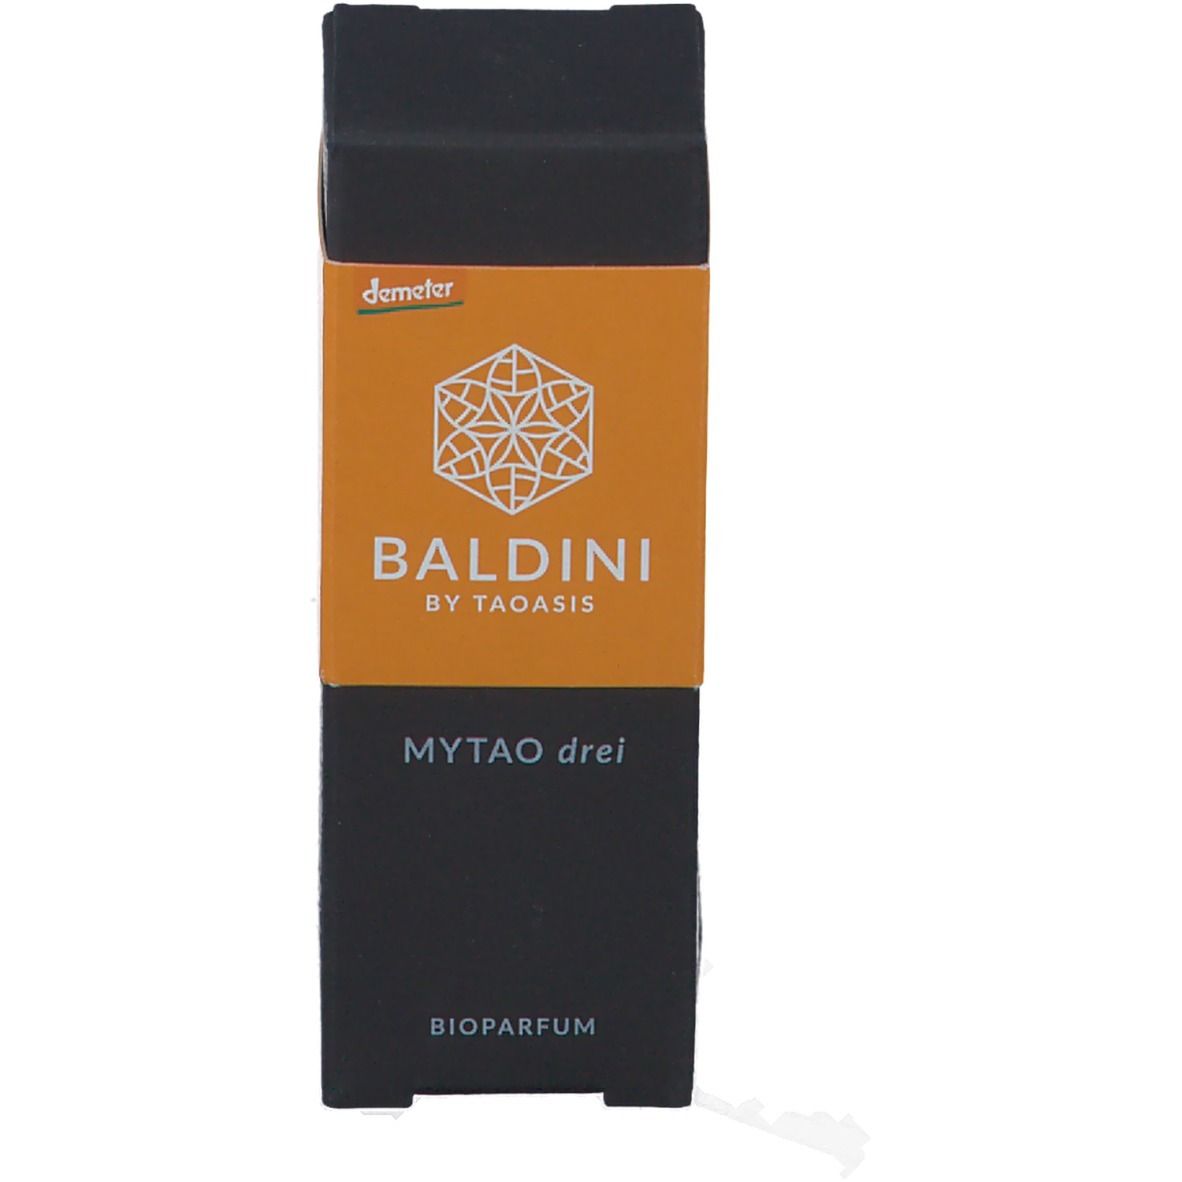 BALDINI BY TAOASIS MYTAO drei Bioparfum